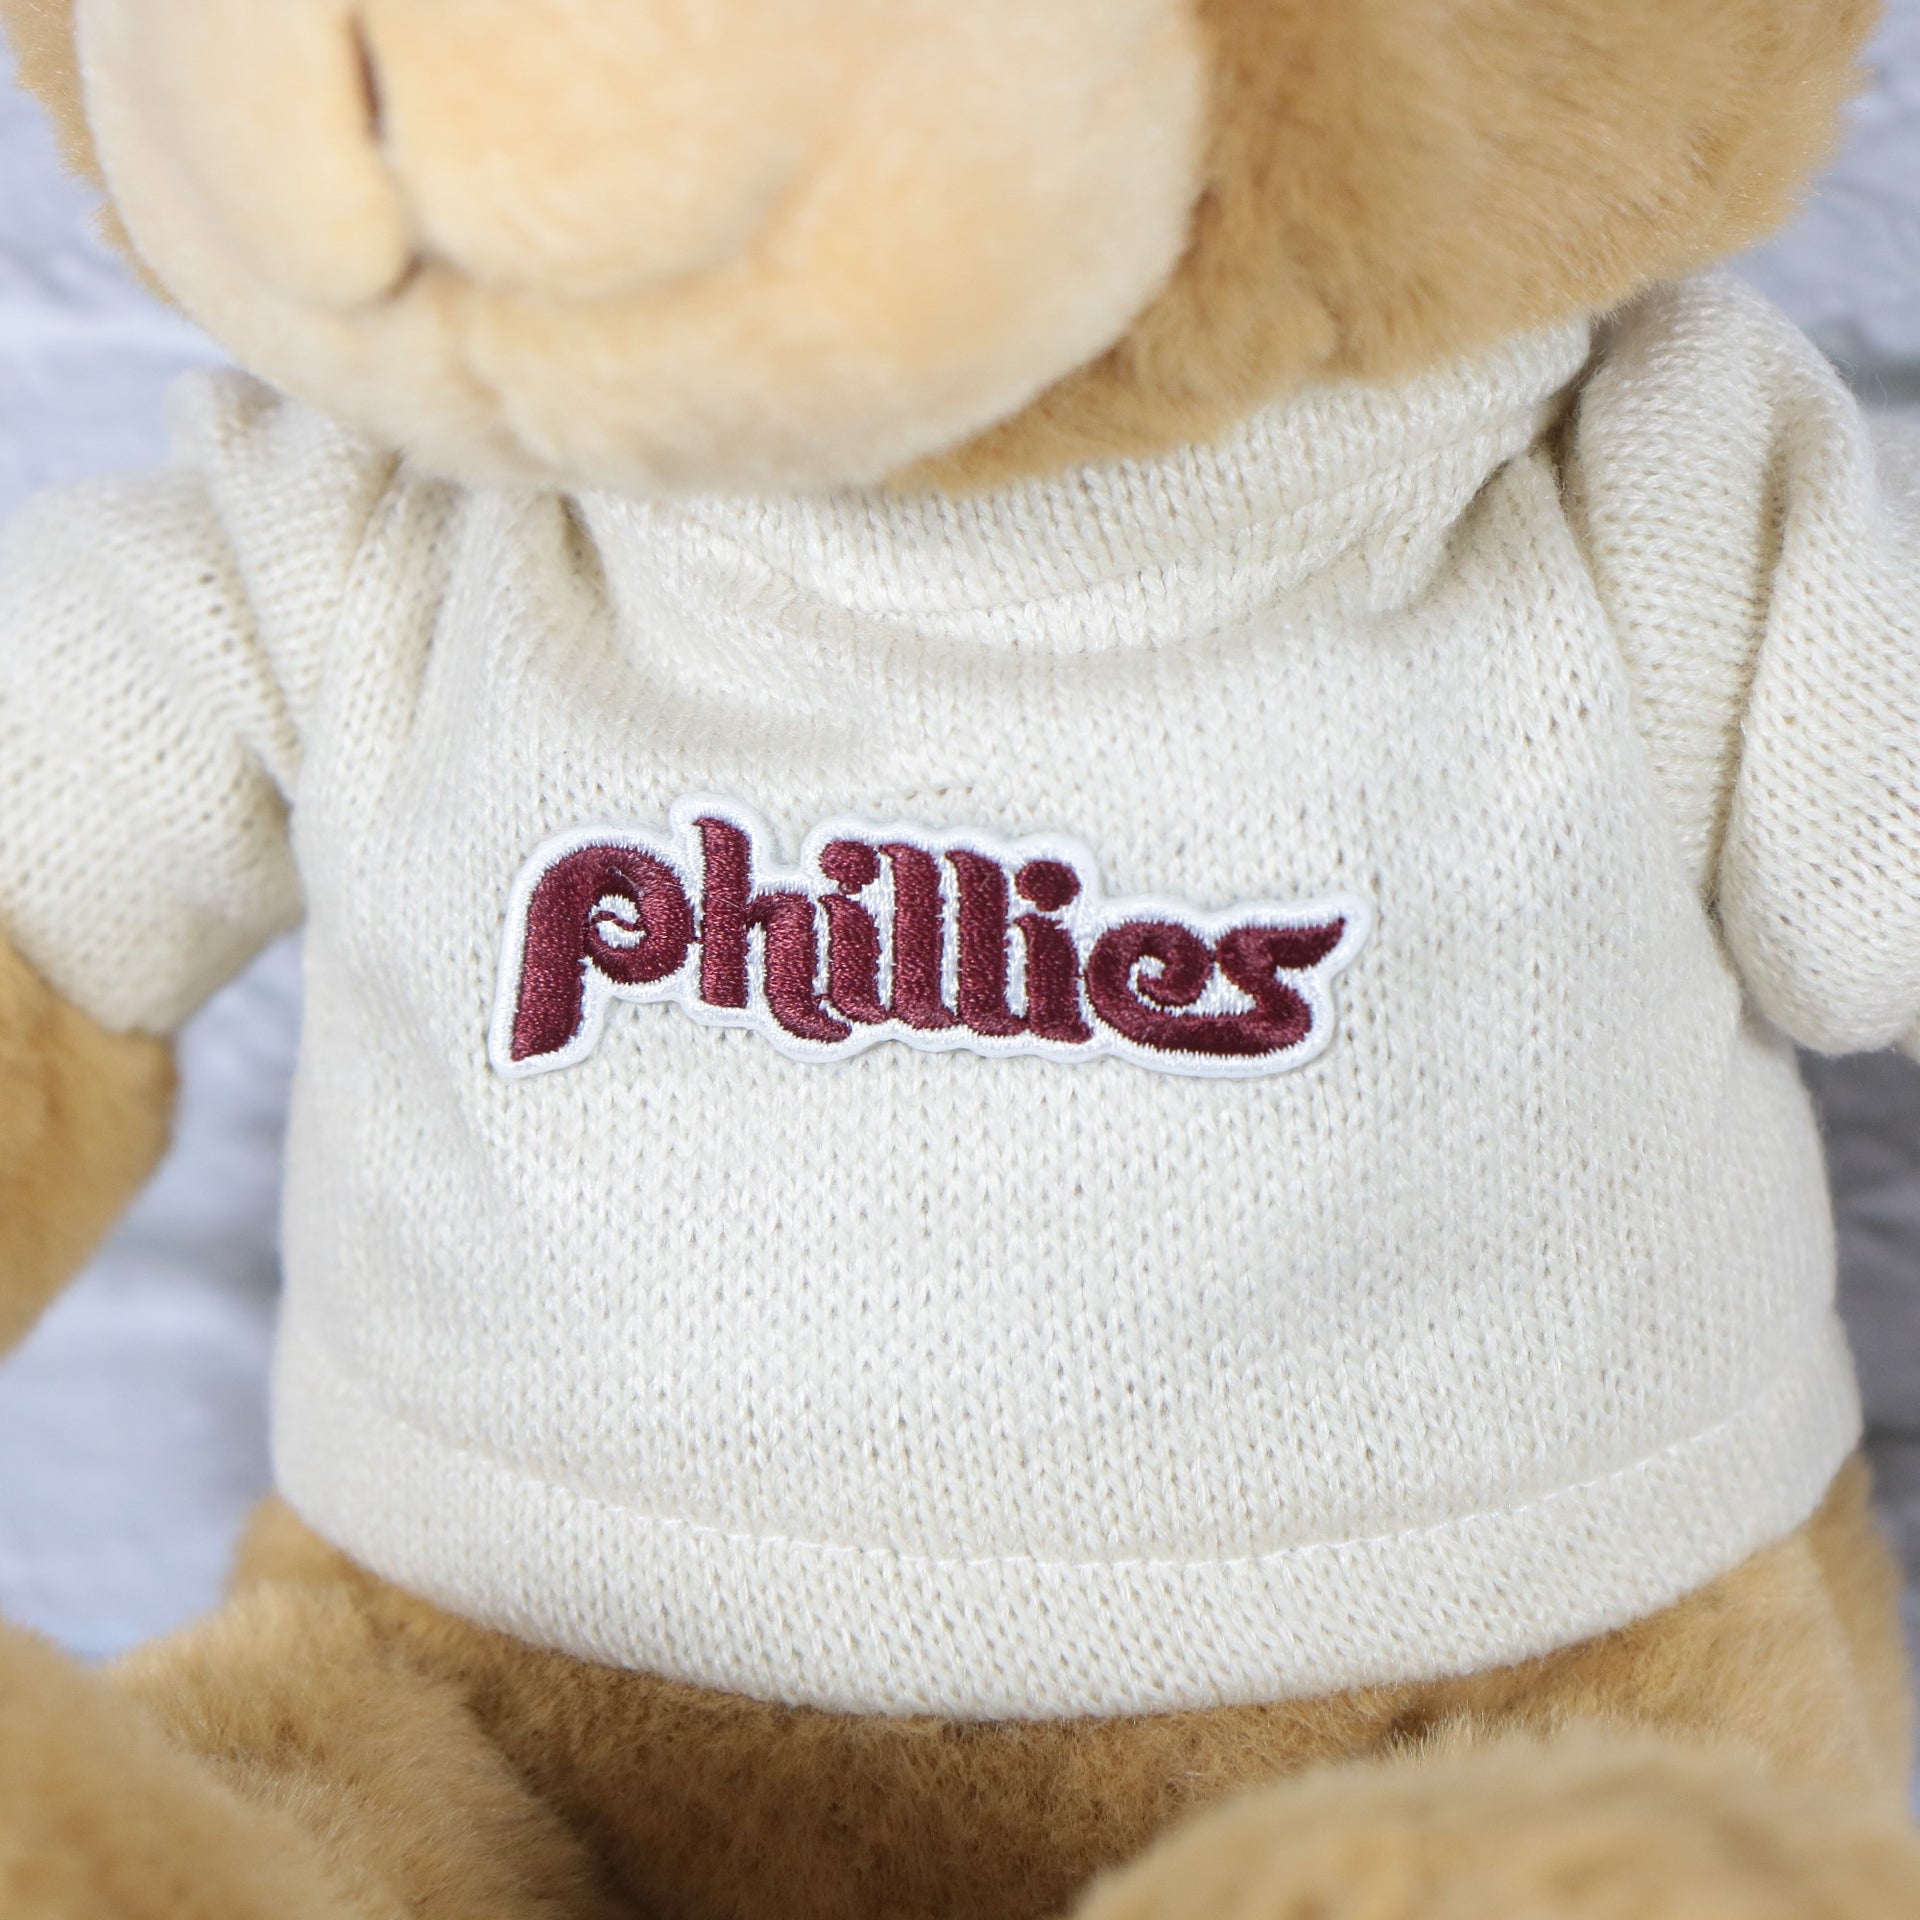 phillies wordmark  on the Philadelphia Phillies Fuzzy Wuzzy "Phillies" Cooperstown wordmark Cream Sweater | Light Brown Teddy Bear